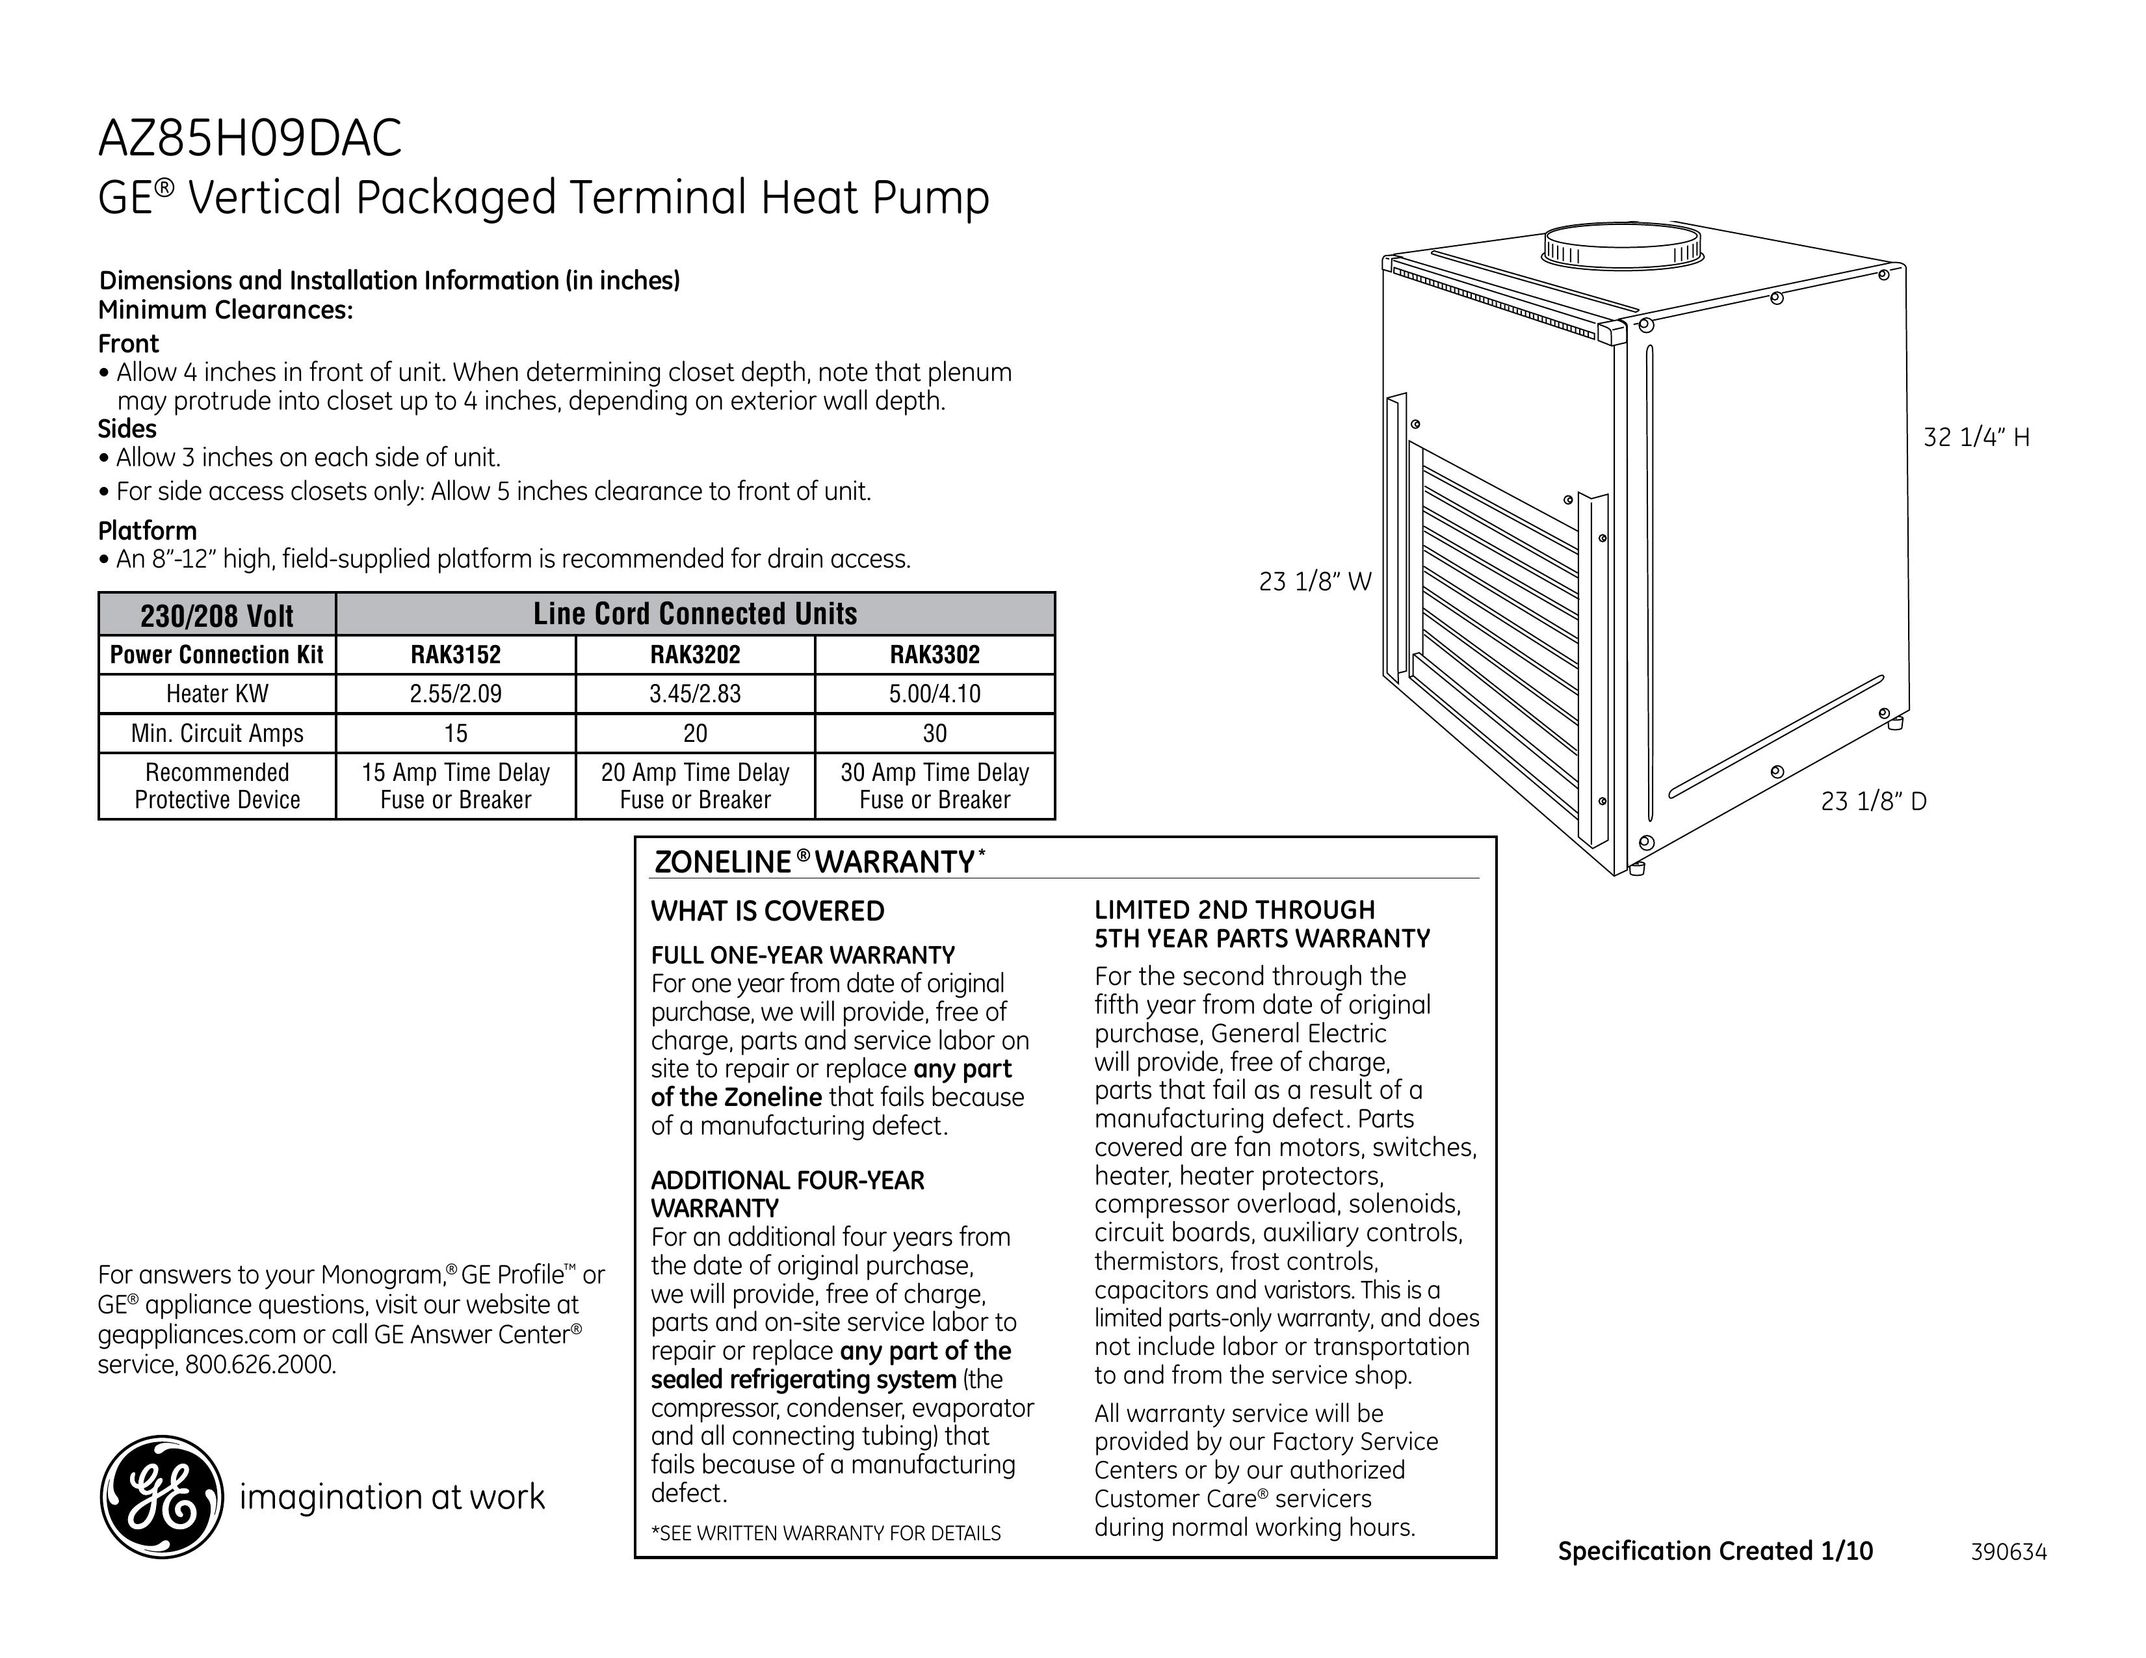 GE AZ85H09DAC Heat Pump User Manual